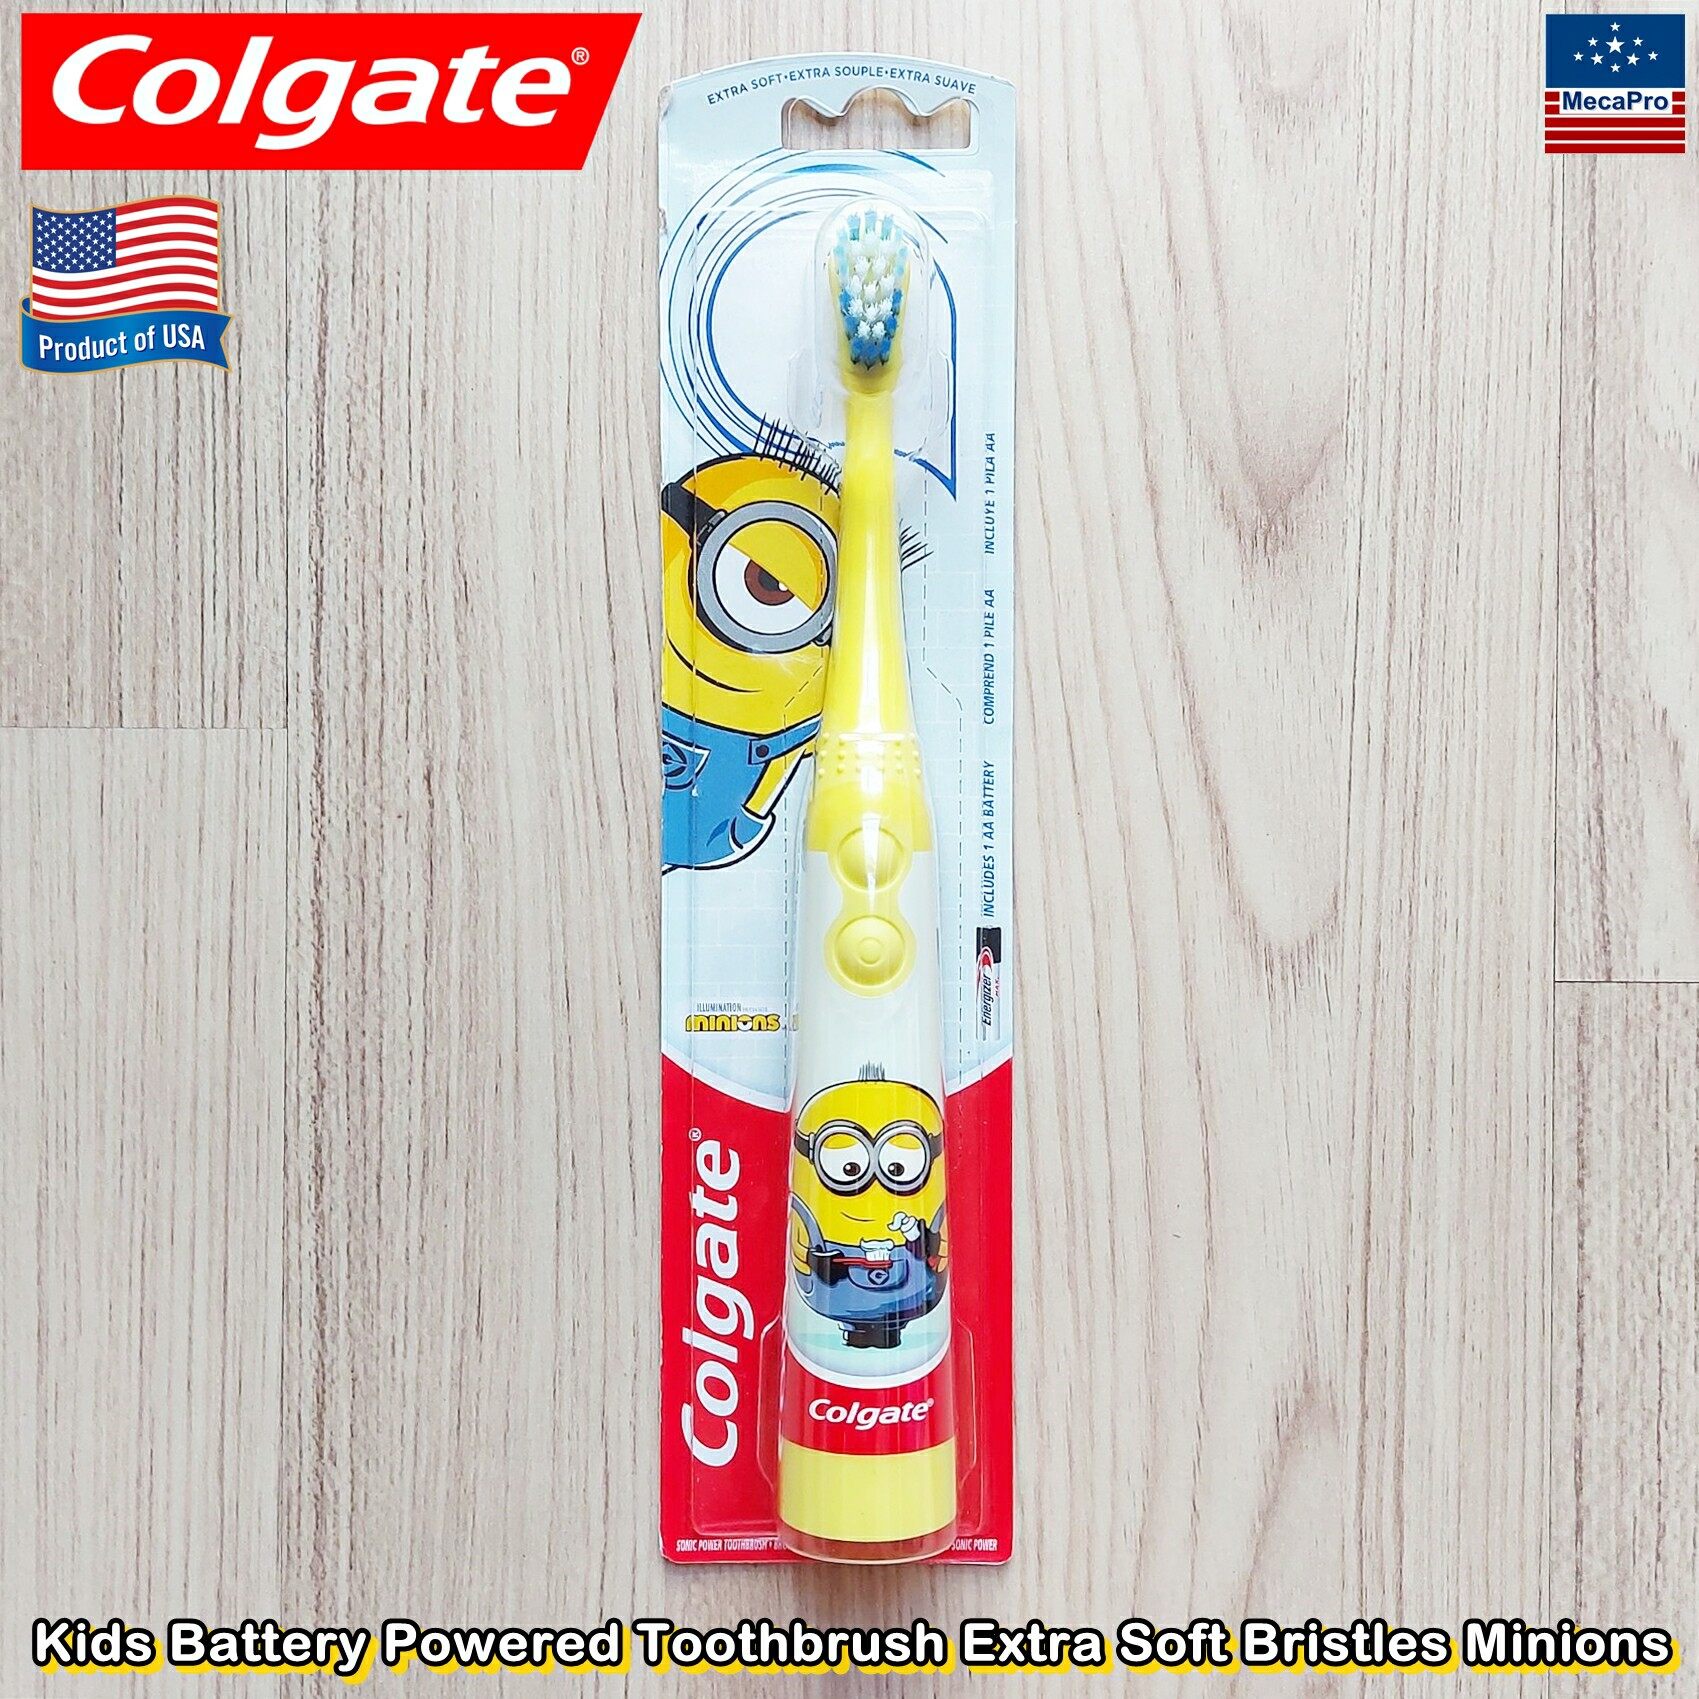 Colgate® Kids Battery Powered Toothbrush Extra Soft Bristles แปรงสีฟันแบตเตอรี่ คอลเกต สำหรับเด็ก